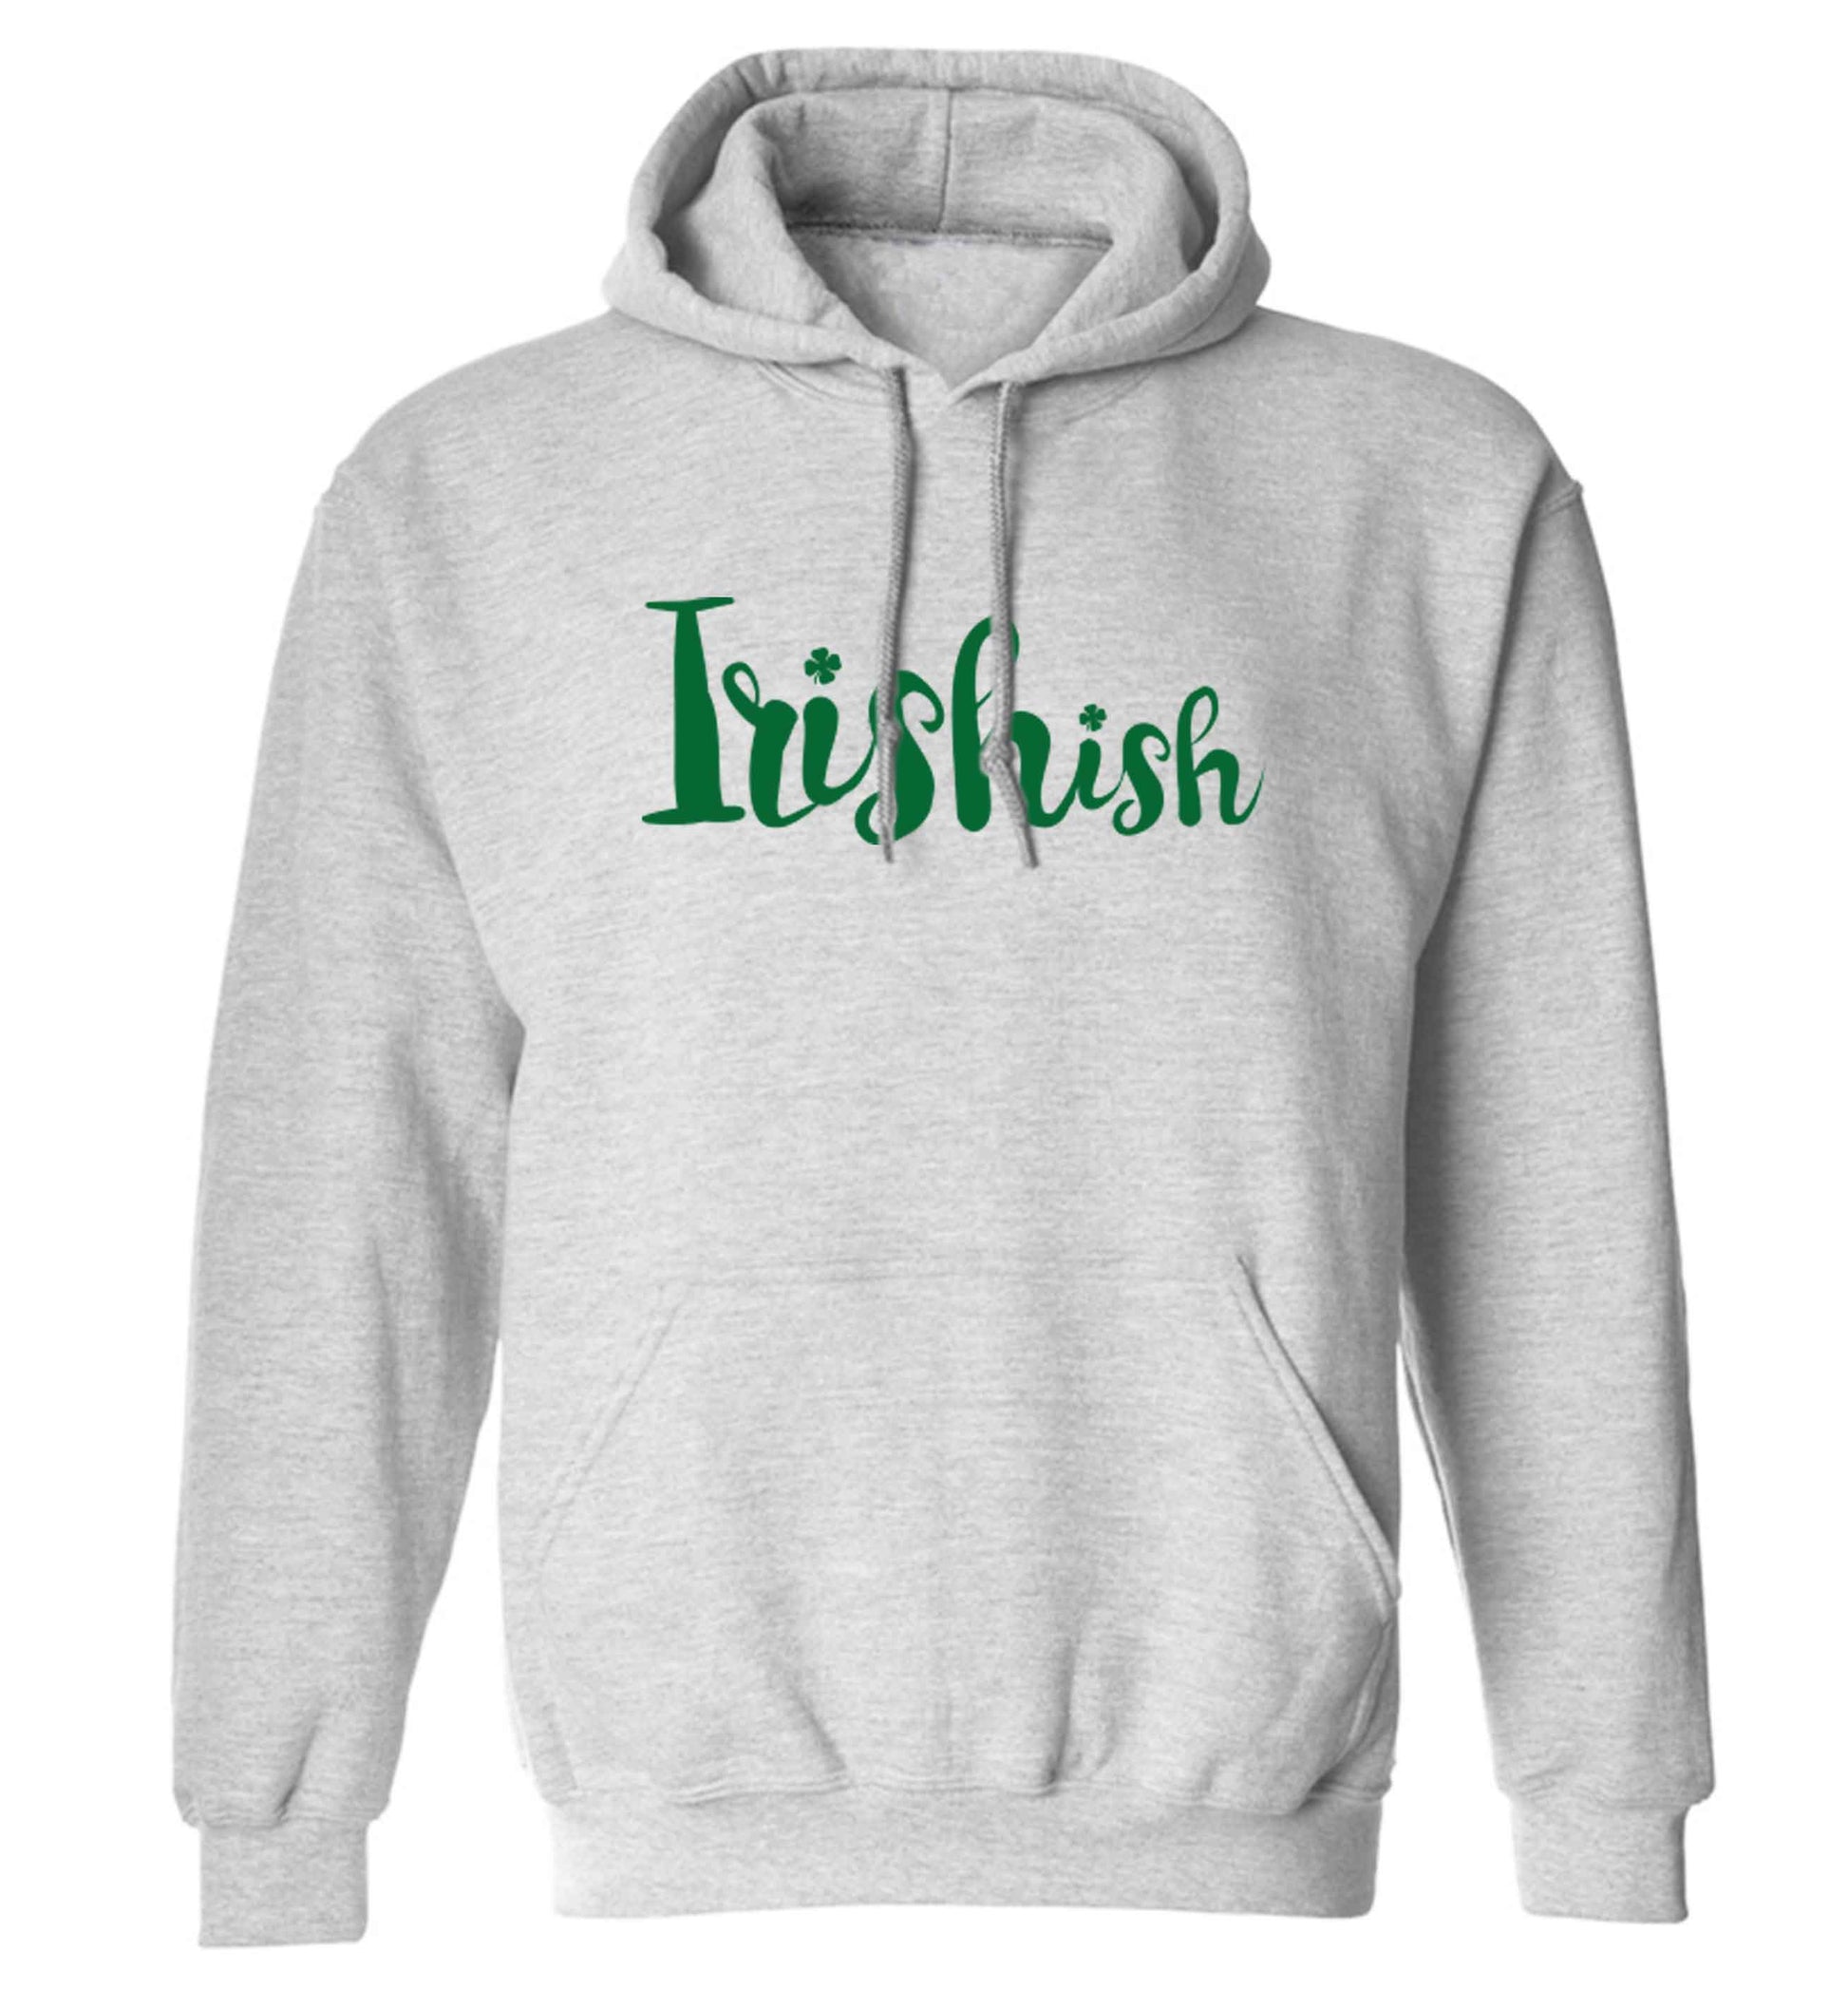 Irishish adults unisex grey hoodie 2XL